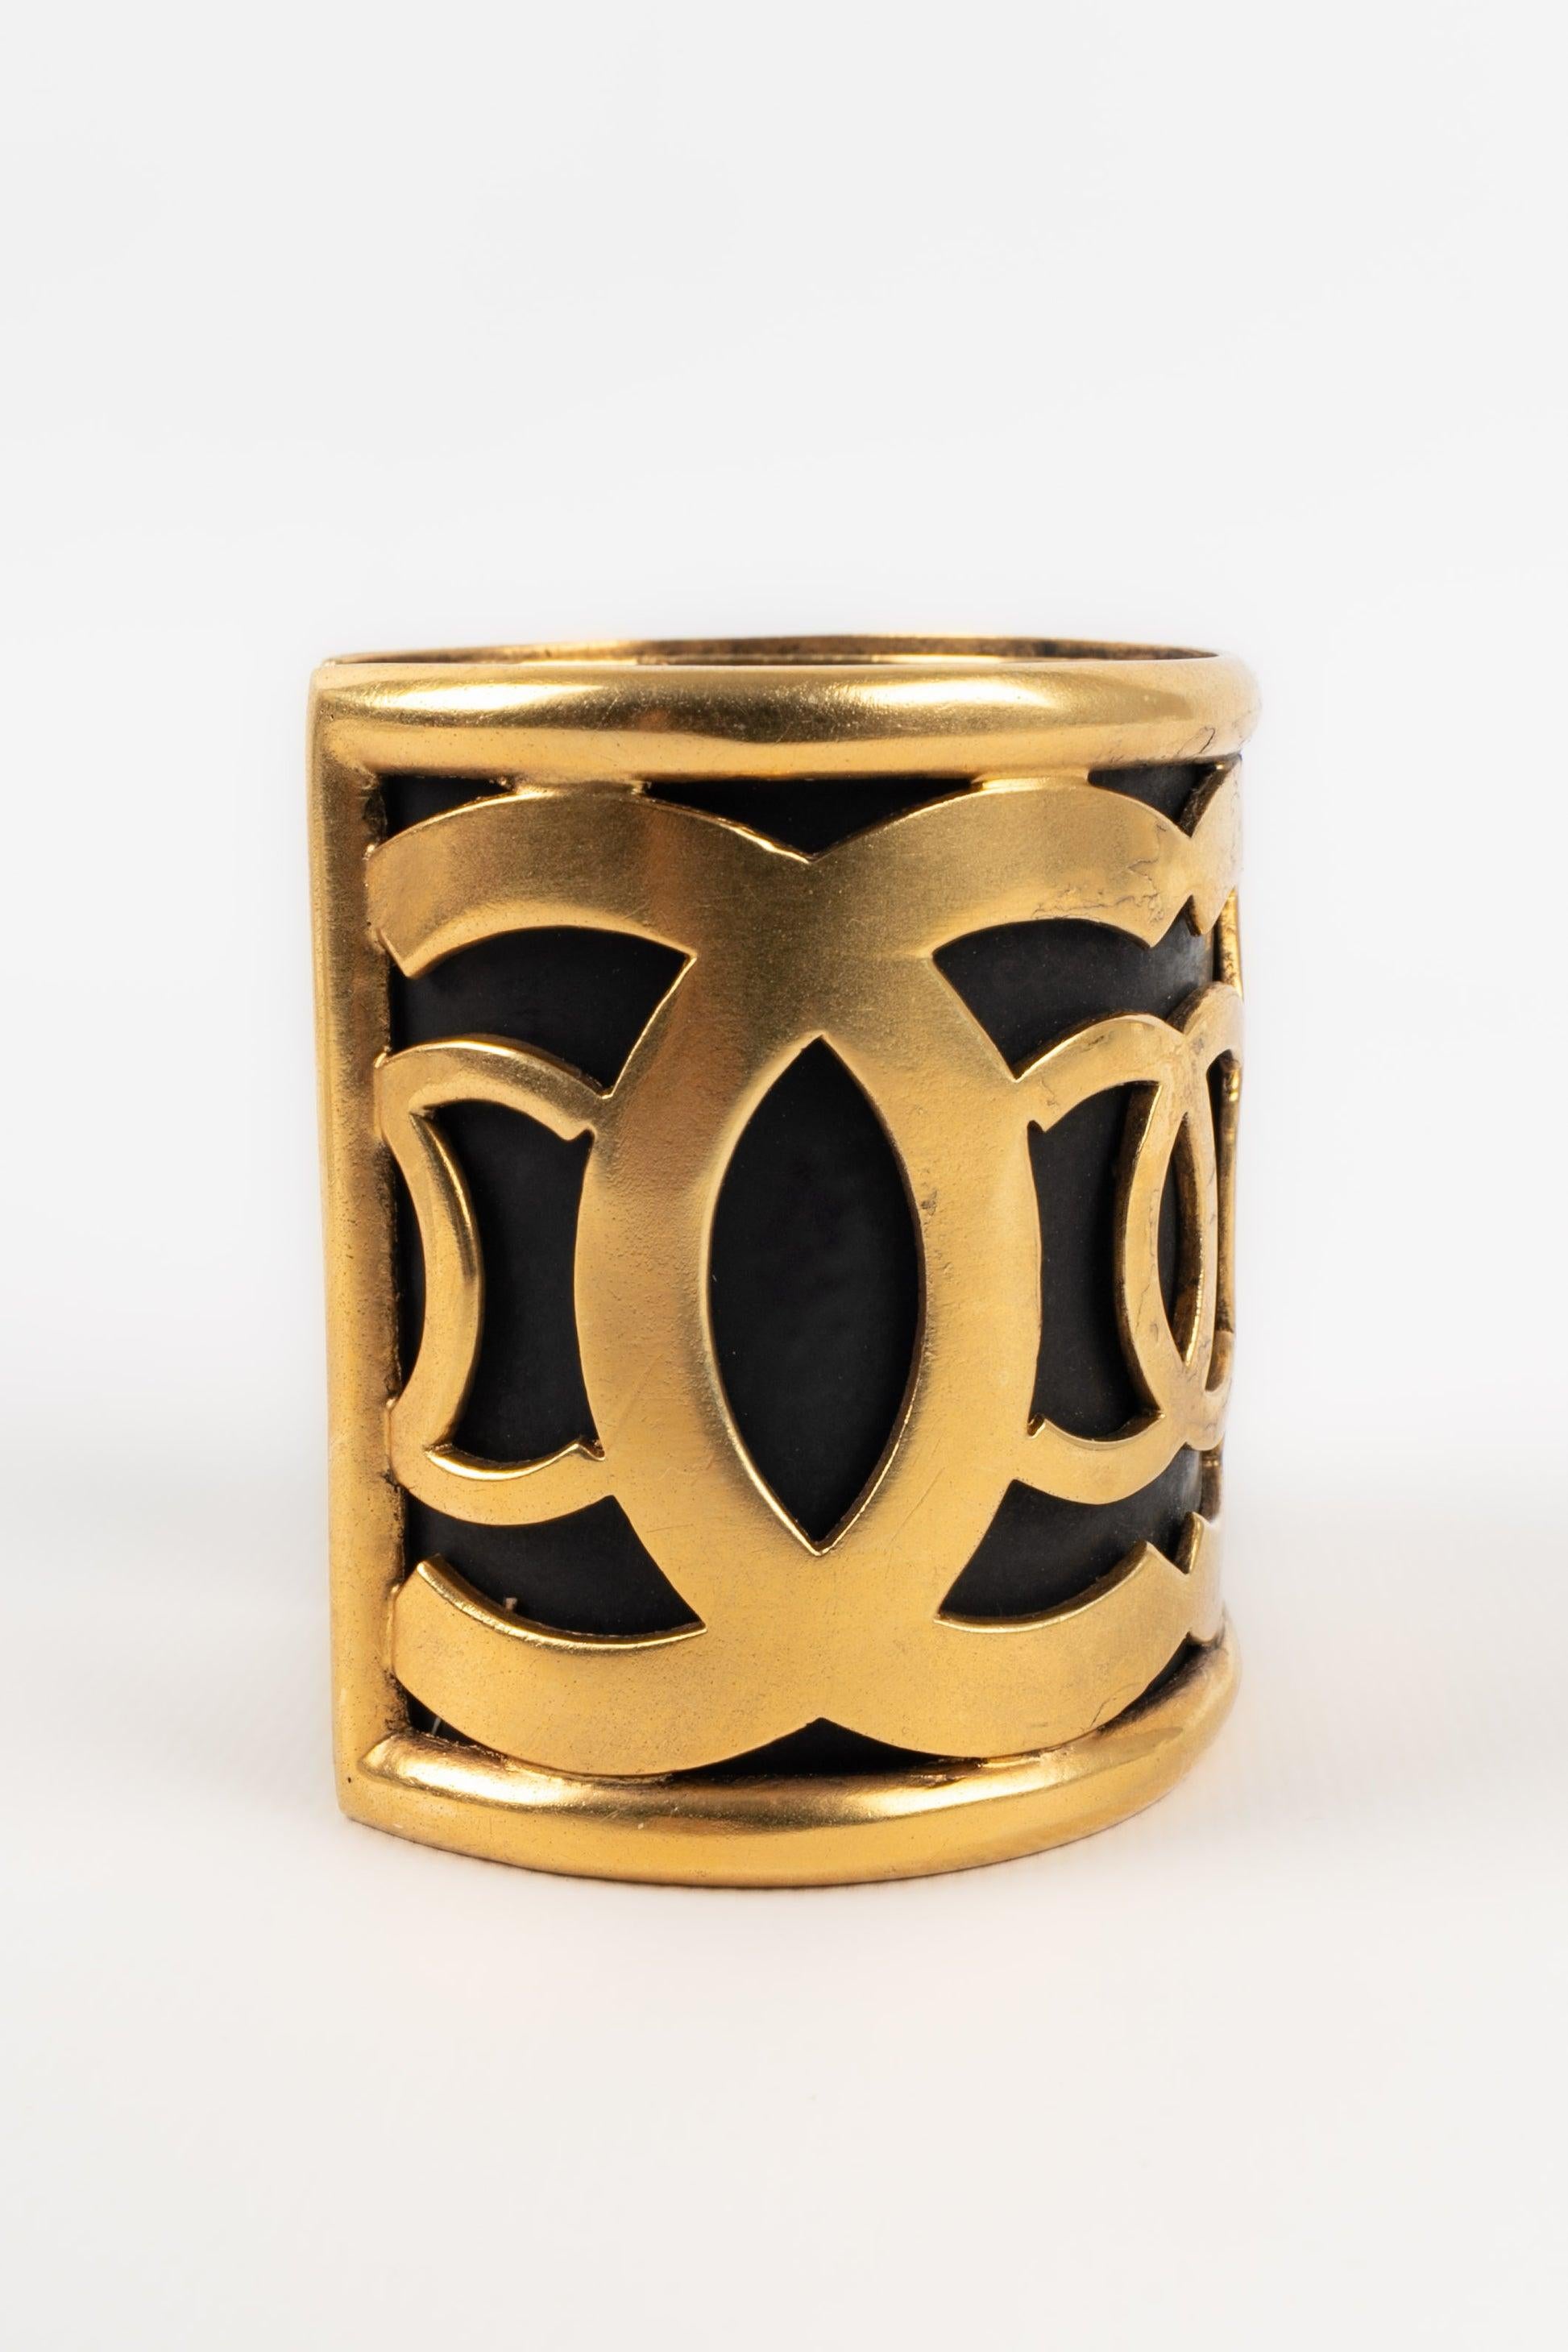 Chanel Cuff Bracelet in Golden Metal on a Black Background For Sale 1